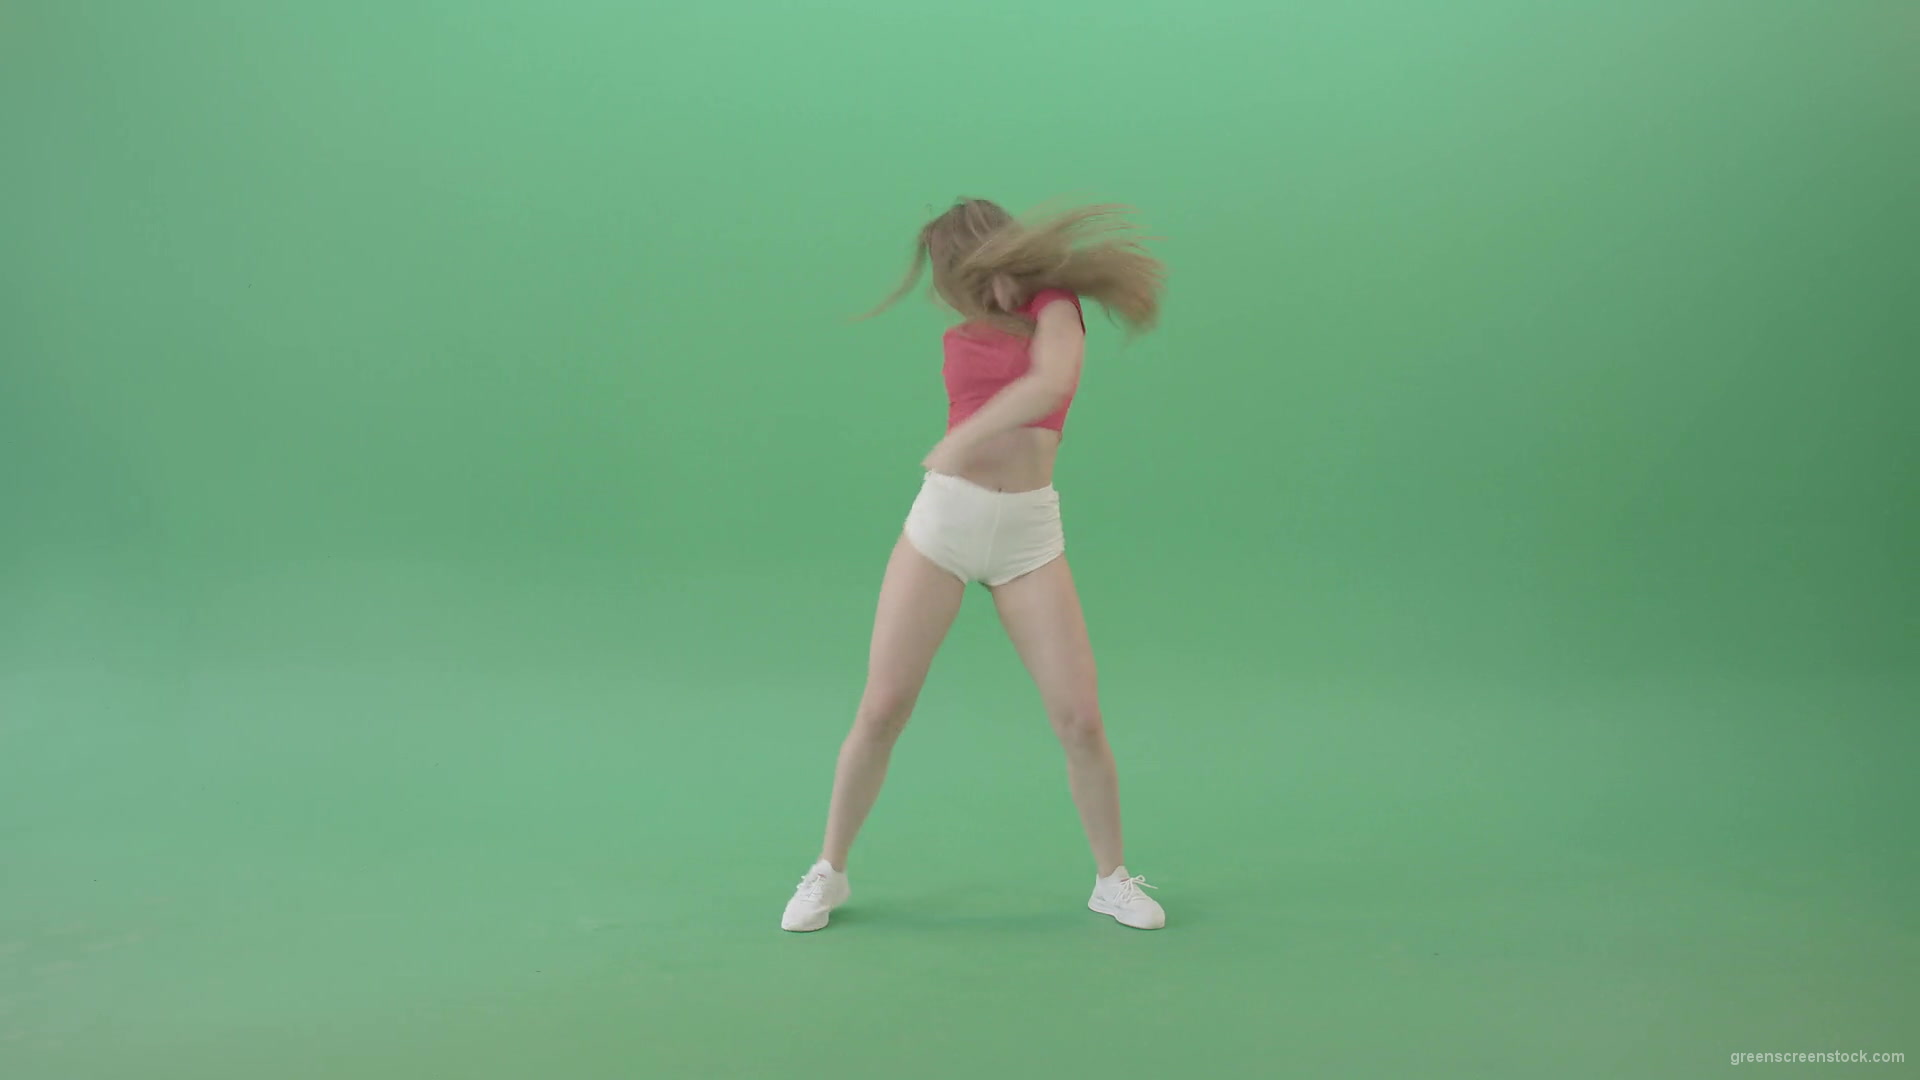 Energy-Girl-dancing-Twerk-and-Hip-Hop-Dance-isolated-on-Green-Screen-4K-Video-Footage-1920_006 Green Screen Stock